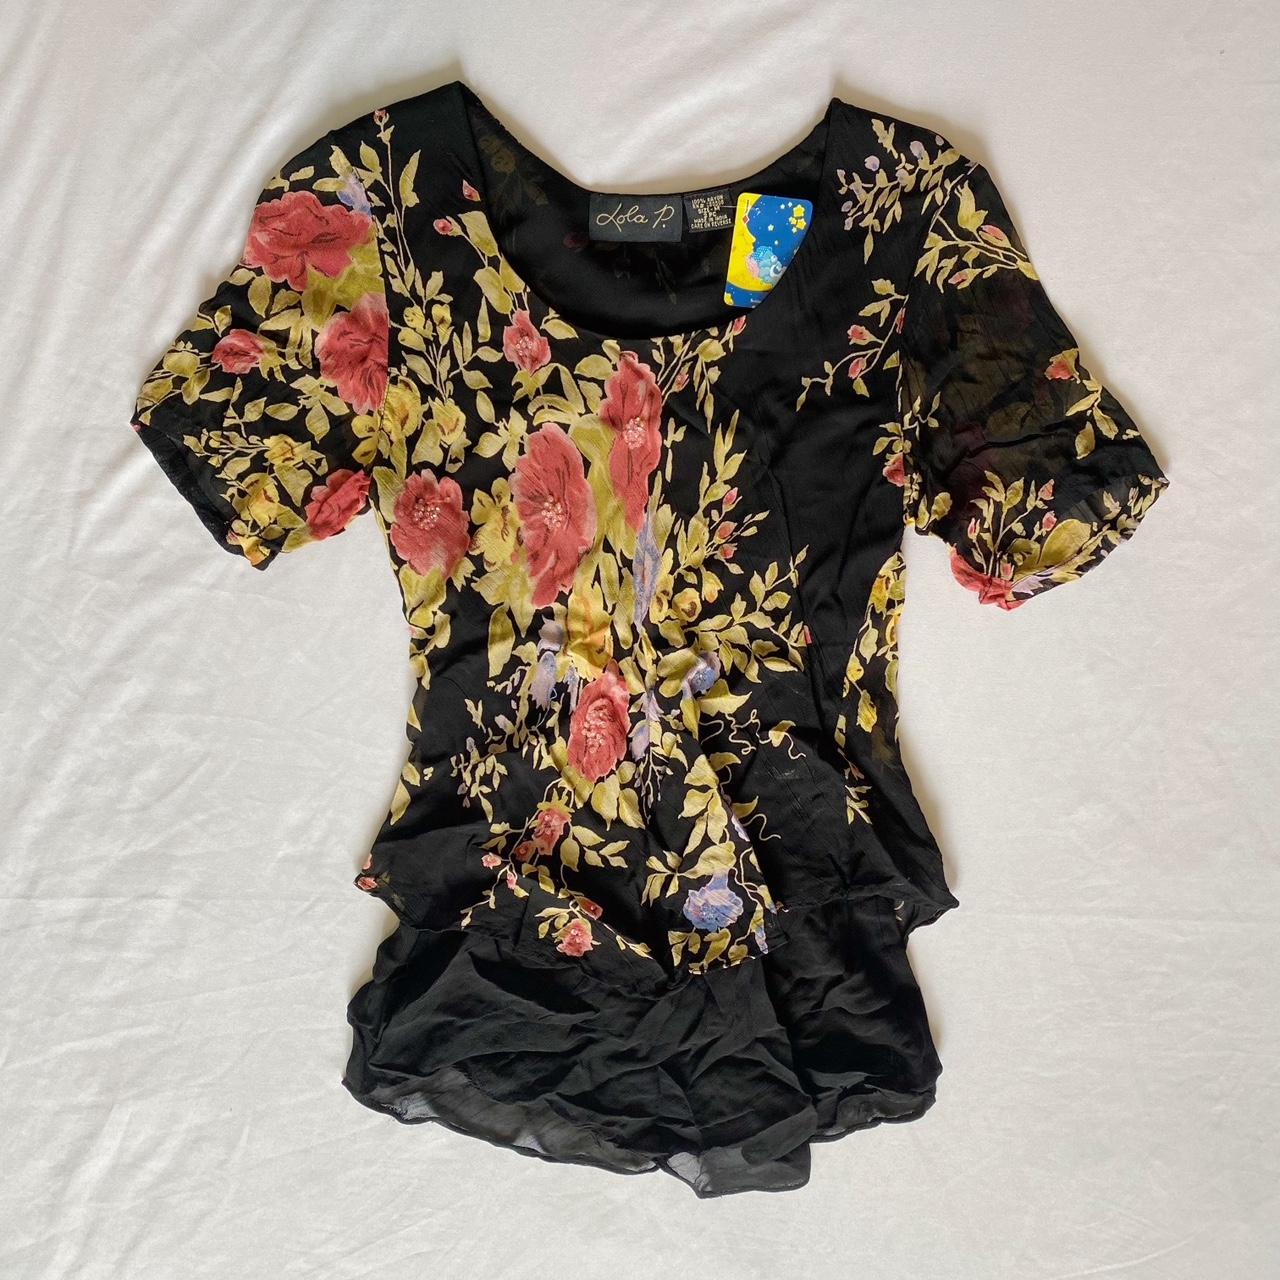 vintage layered floral blouse - size medium (fits... - Depop